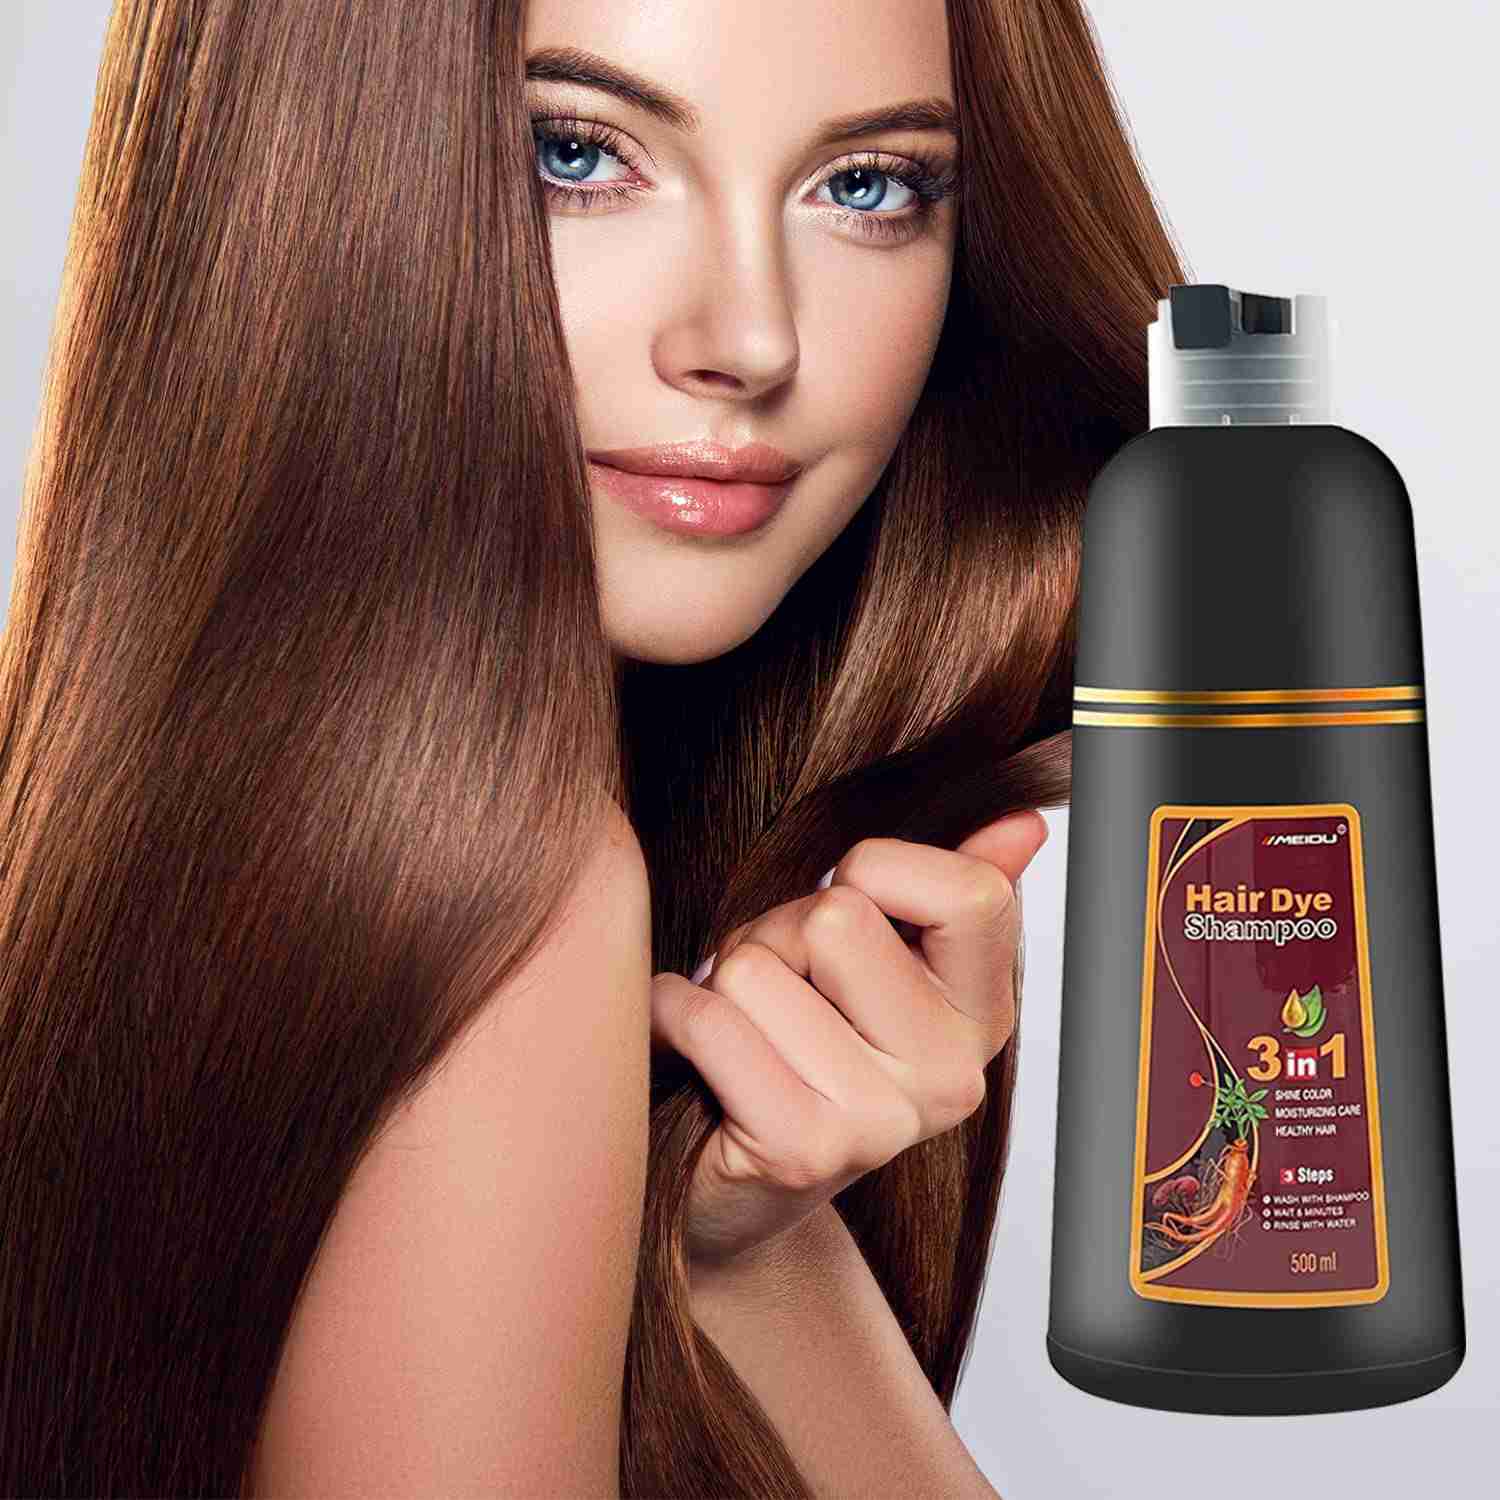 hair-dye-shampoo with cash back rebate